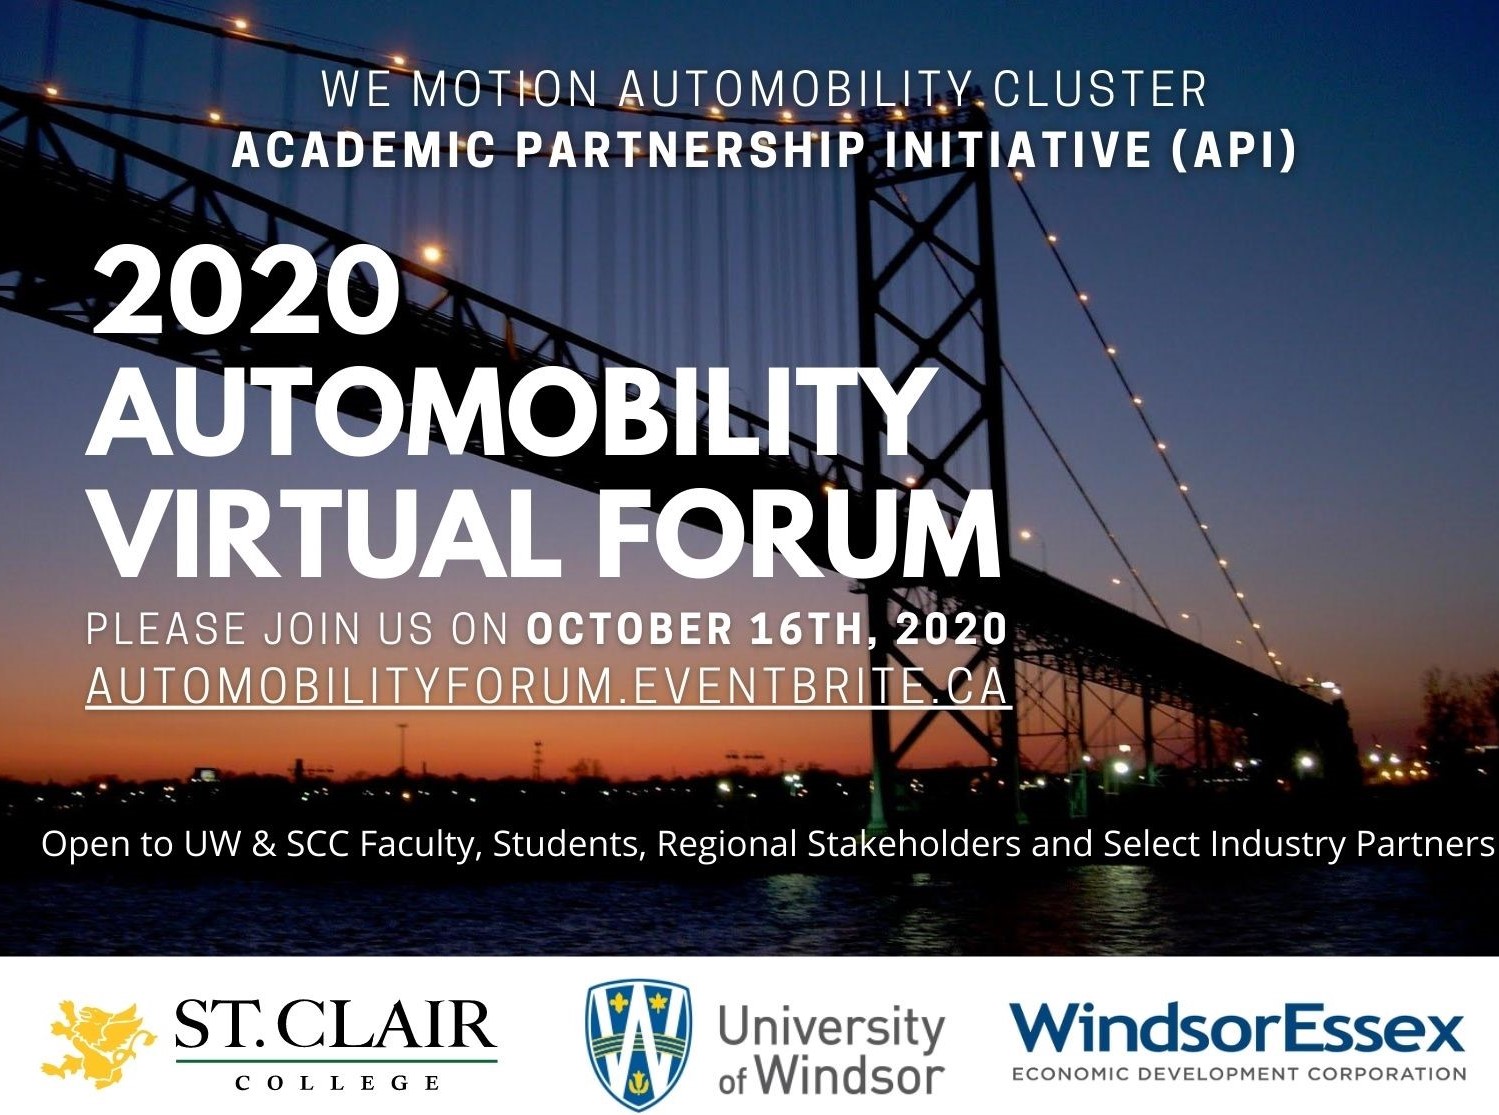 Automobility Virtual Forum Oct 16 2020 register at automobilityforum.eventbrite.ca